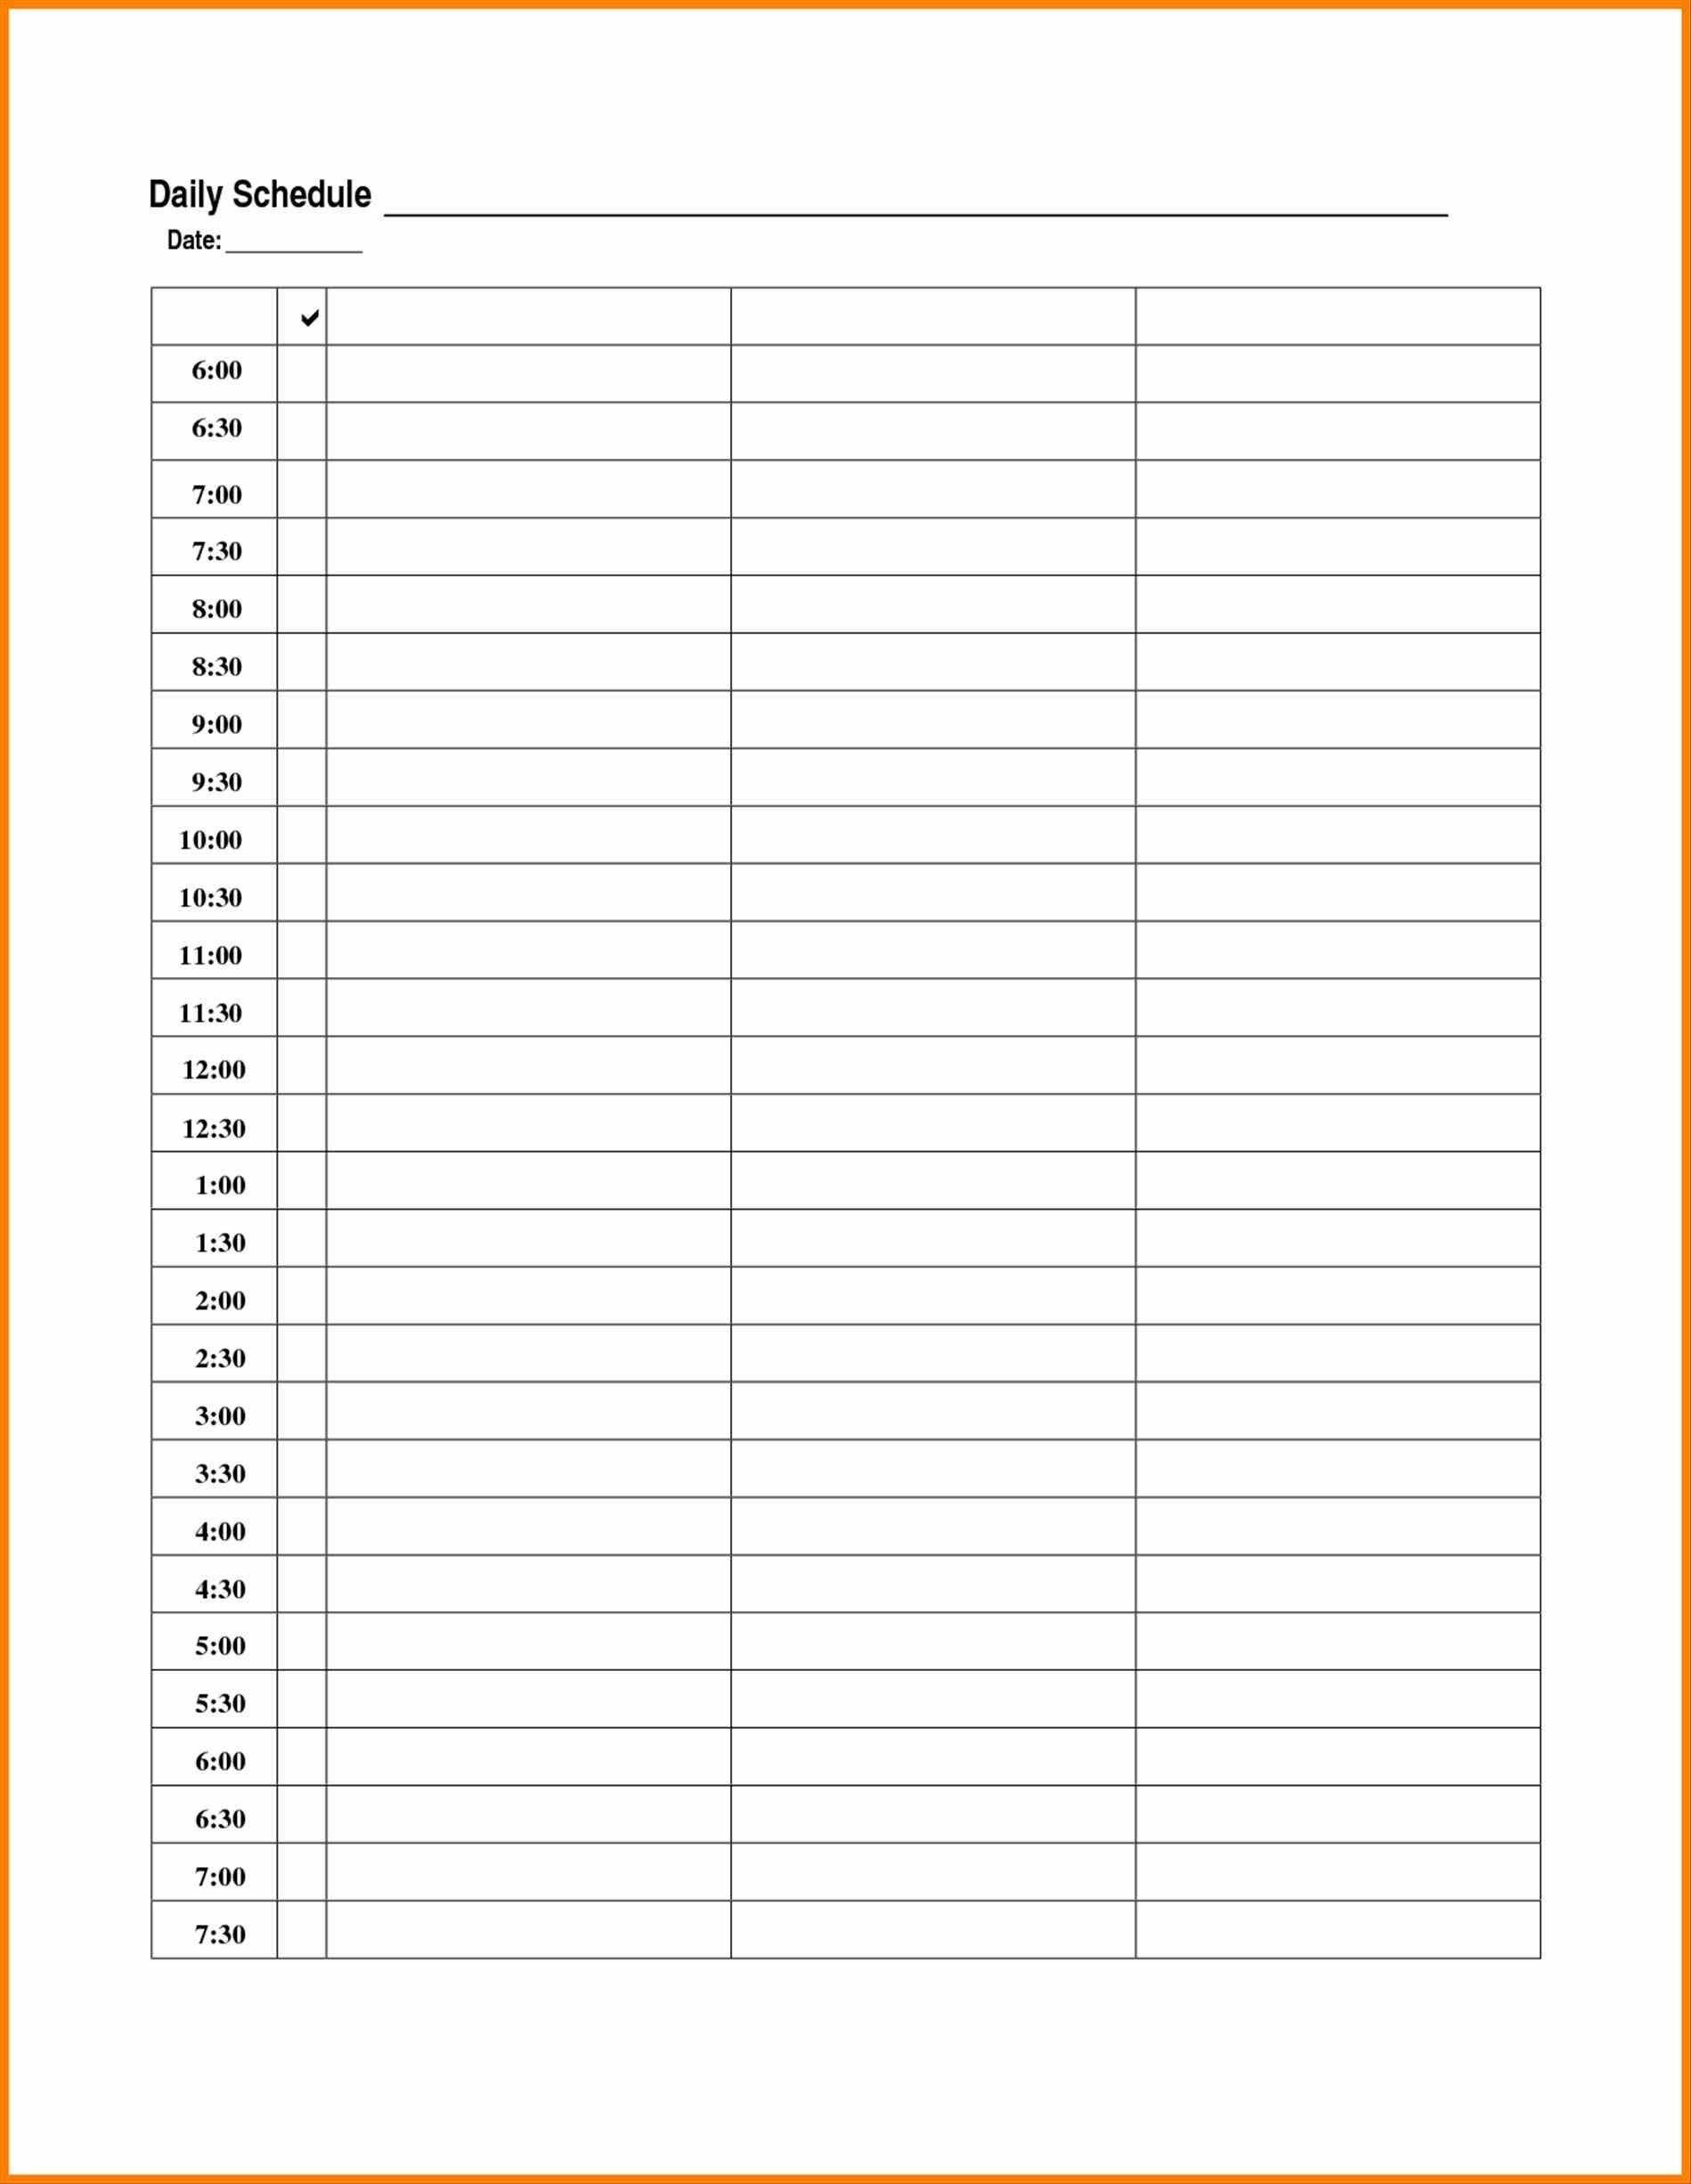 Daily Calendar Template Excel Daily Calendar Template In 2020